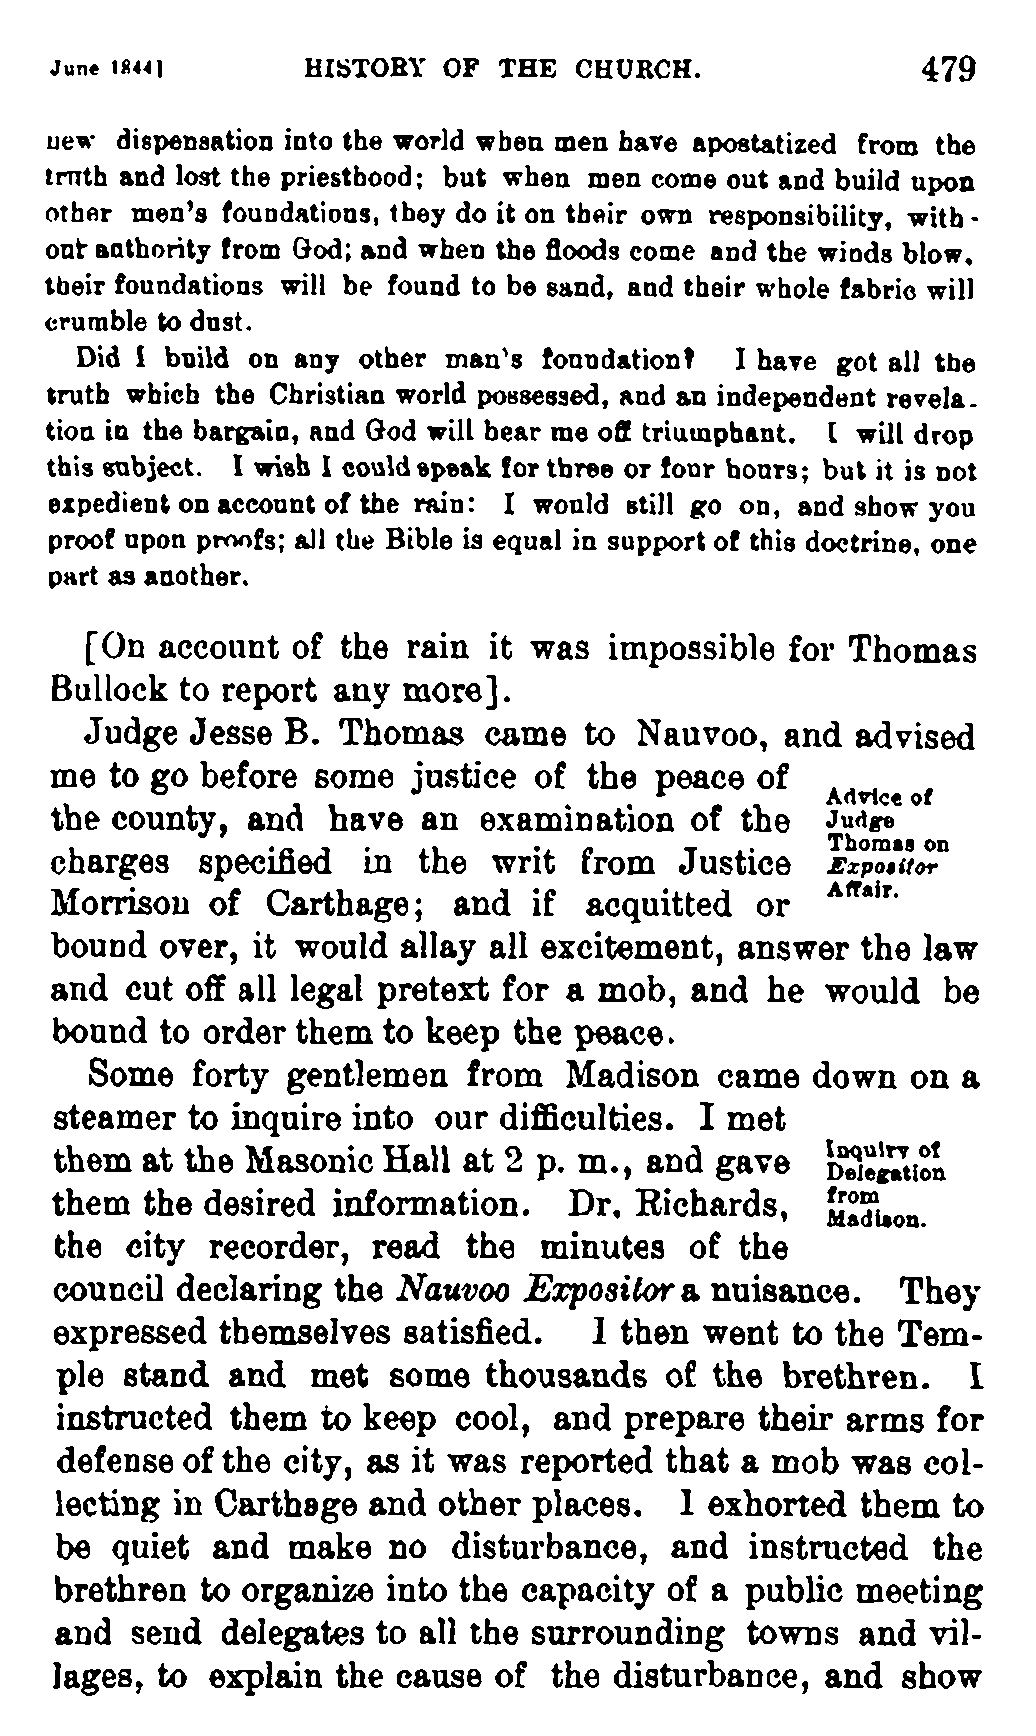 History of the Church, vol. 6, p. 479